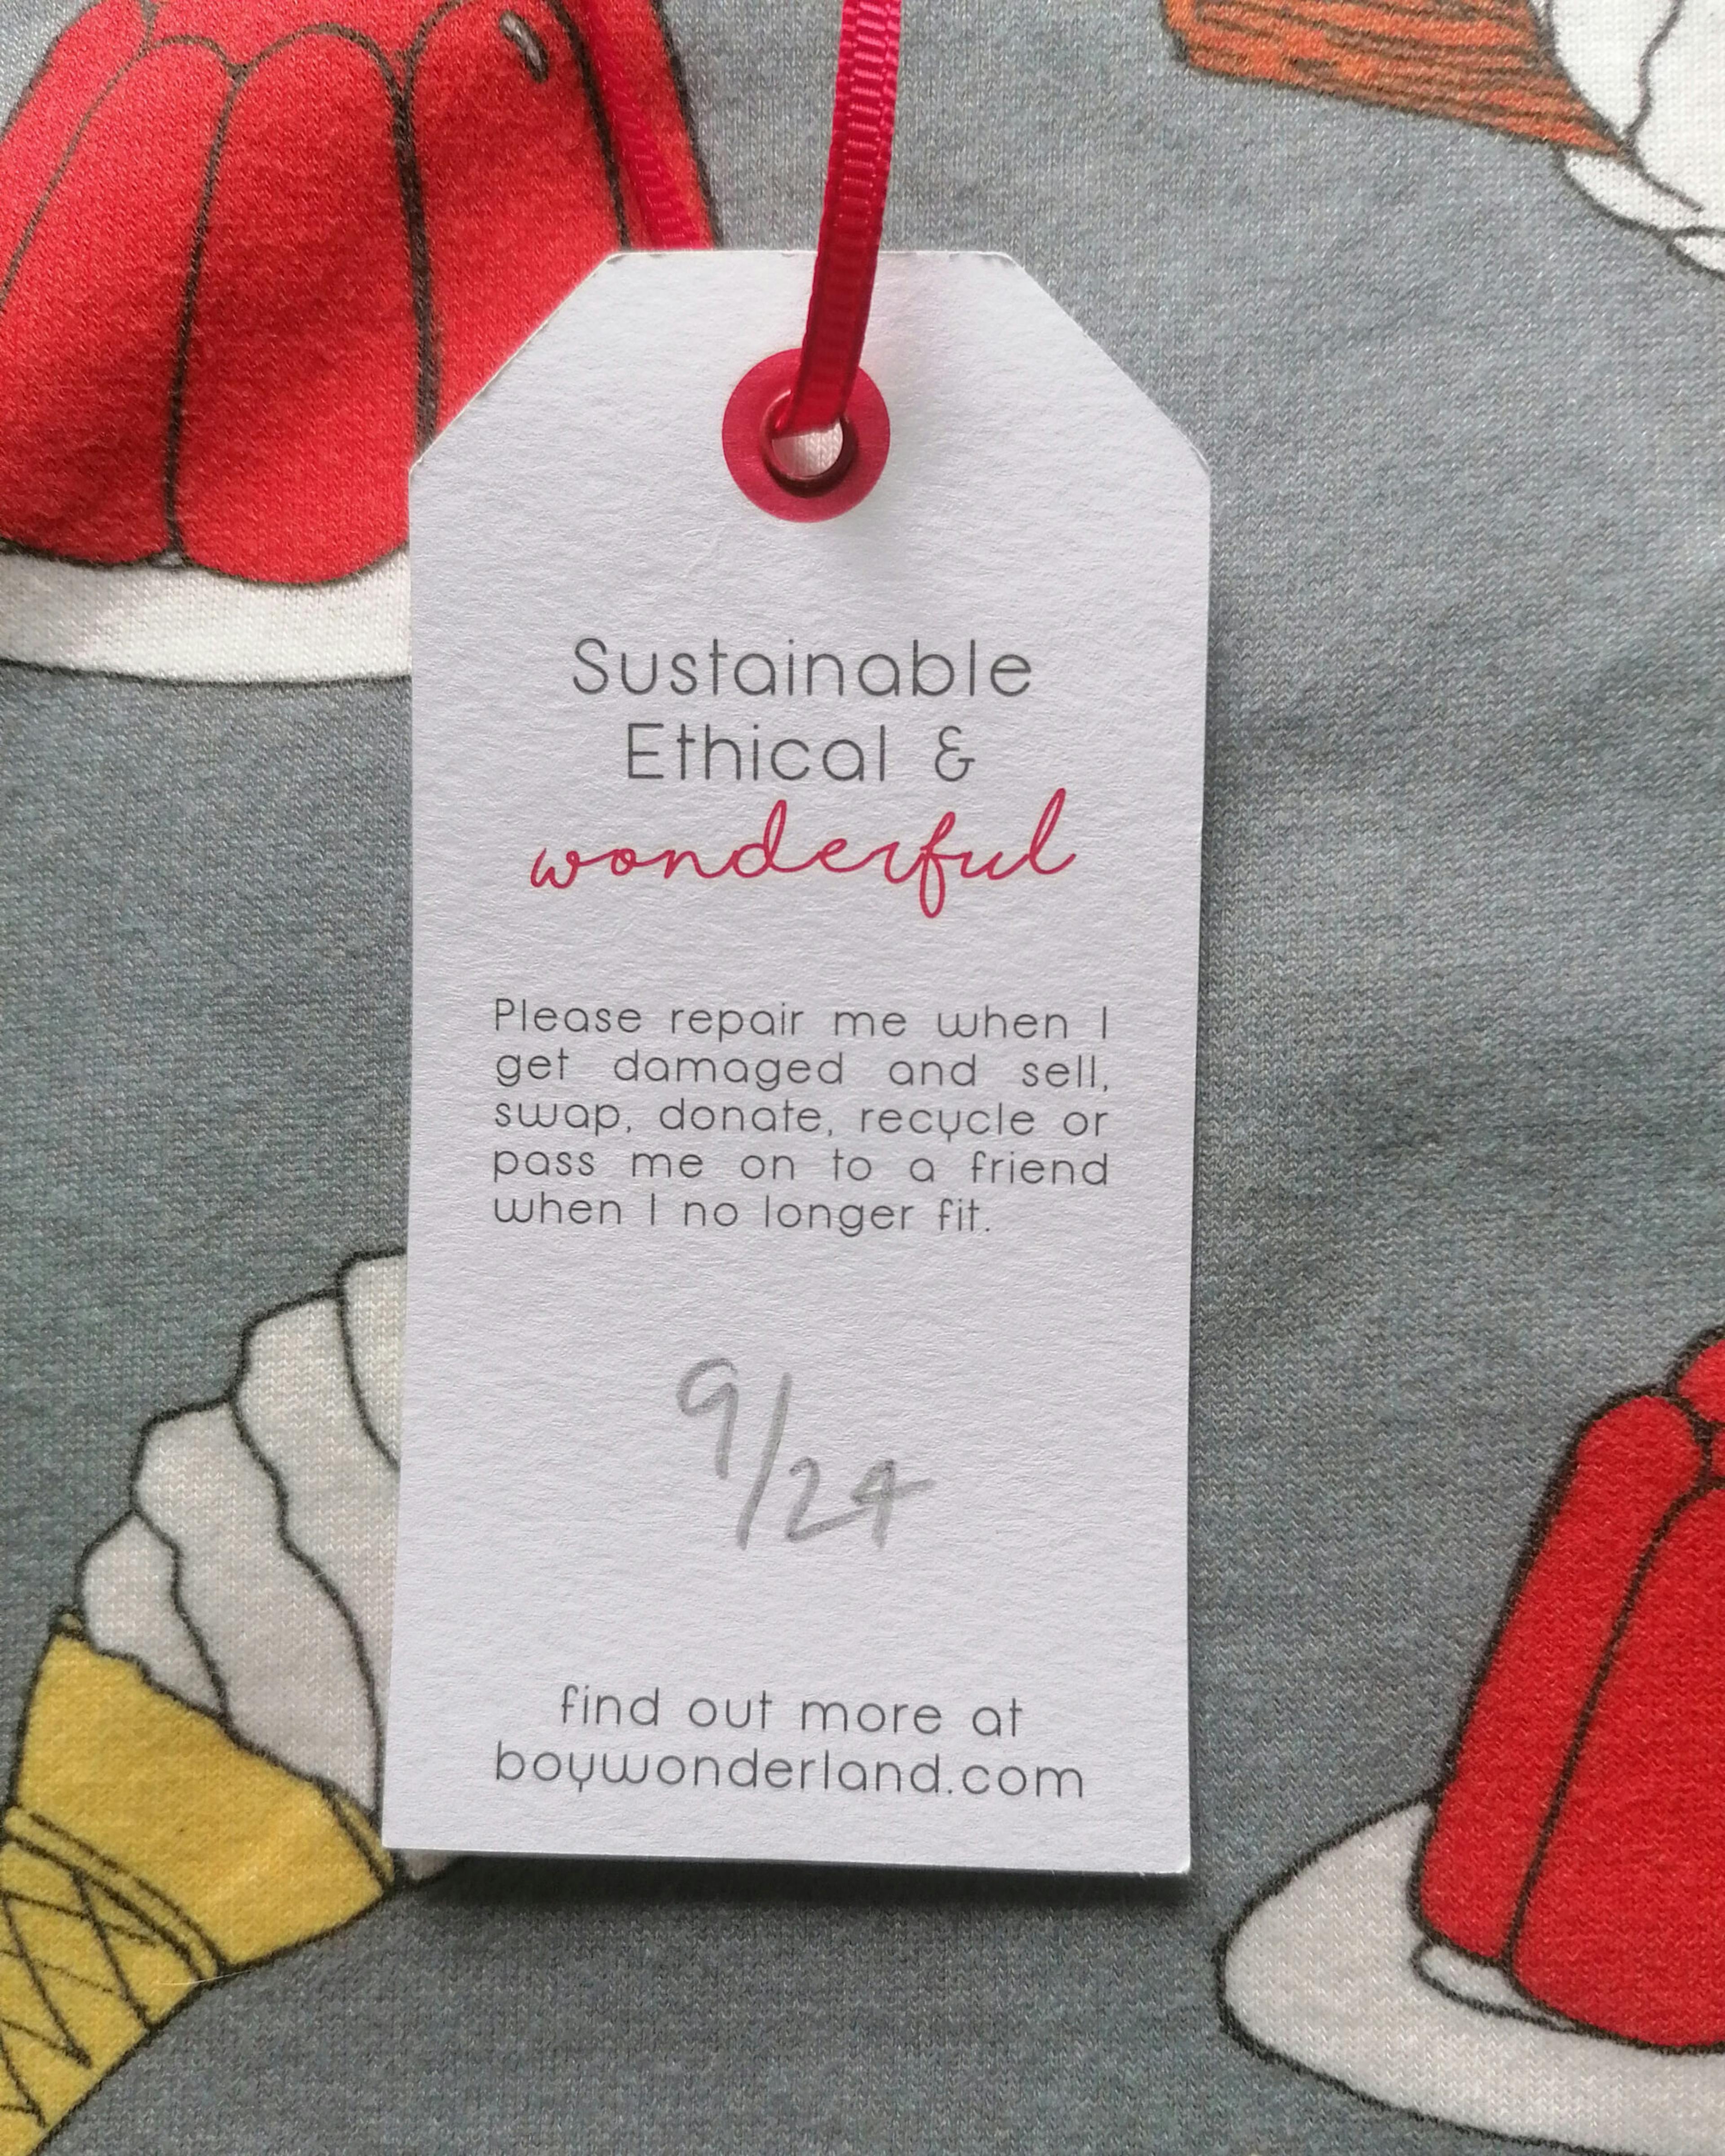 Thunberg Kids | 100% Organic Cotton Long Sleeved T-shirt | Jelly Print | Grey & Multi-Coloured